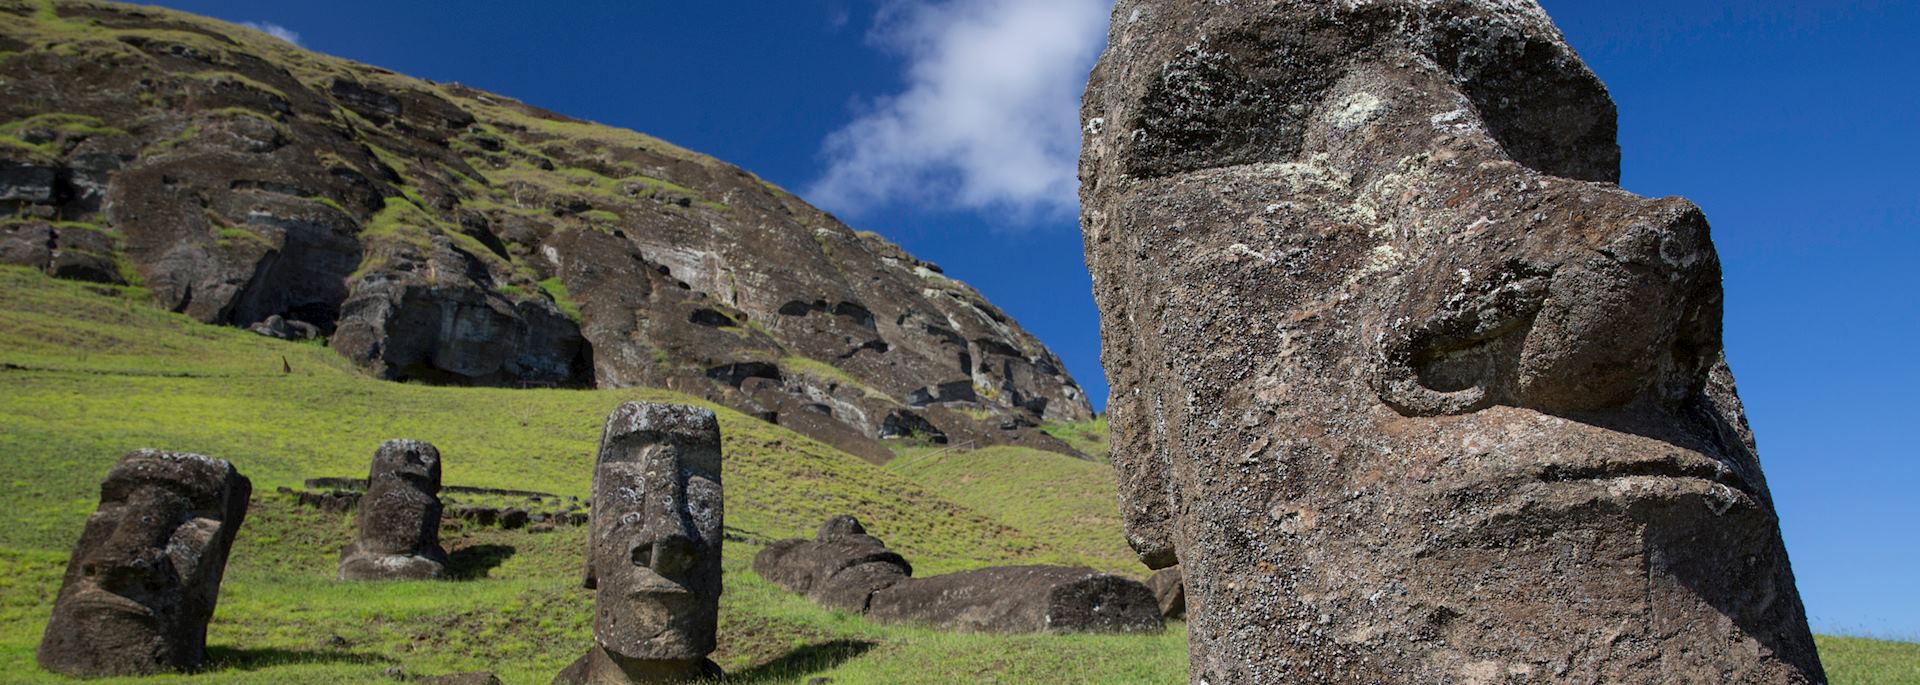 Rano Raraku, Easter Island